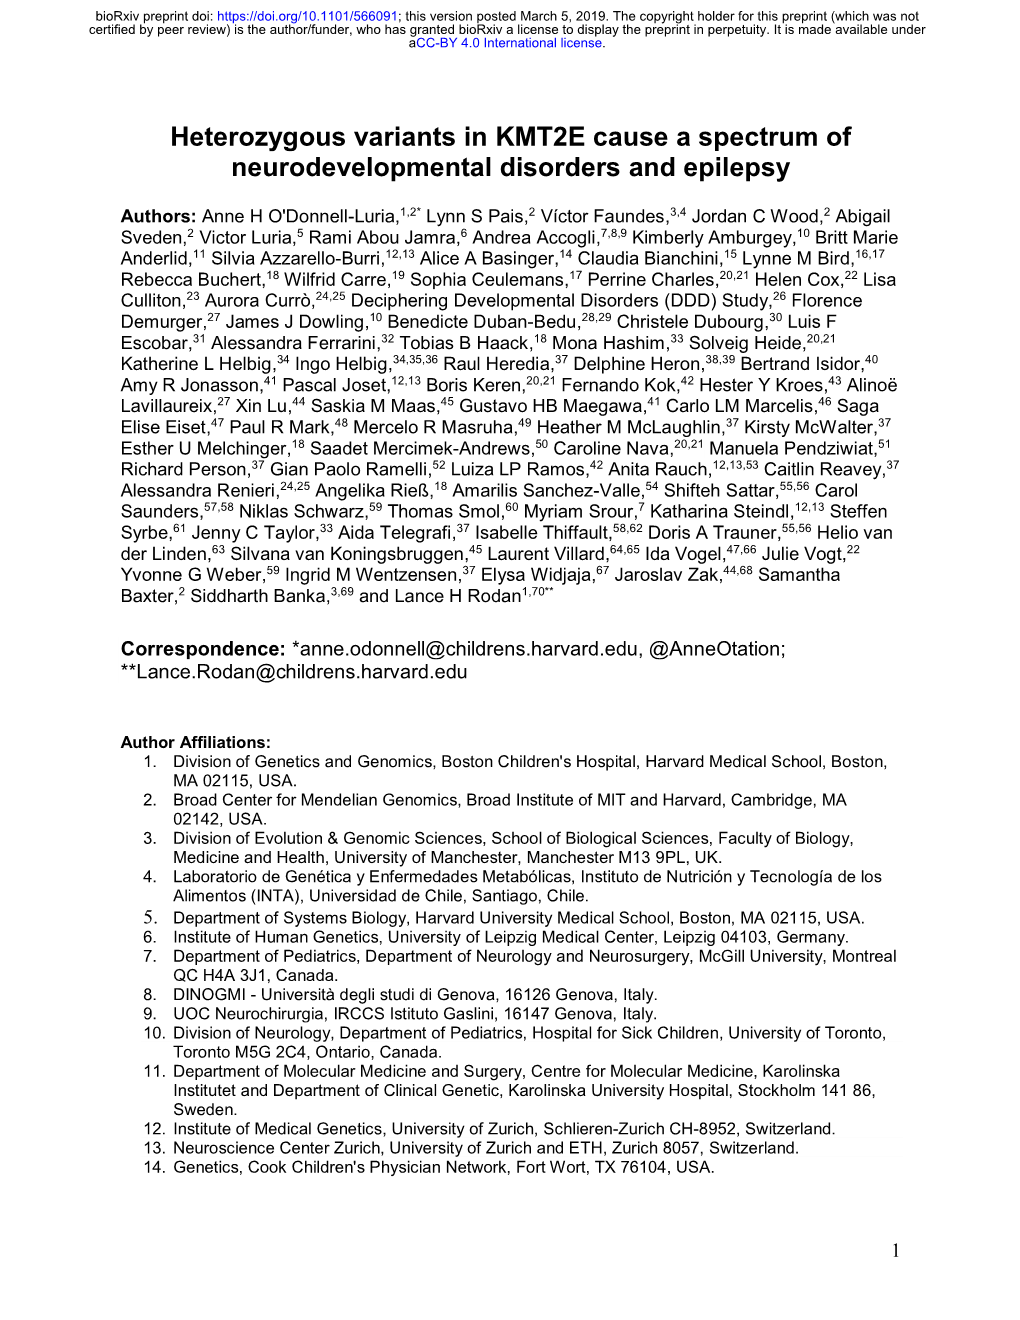 Heterozygous Variants in KMT2E Cause a Spectrum of Neurodevelopmental Disorders and Epilepsy